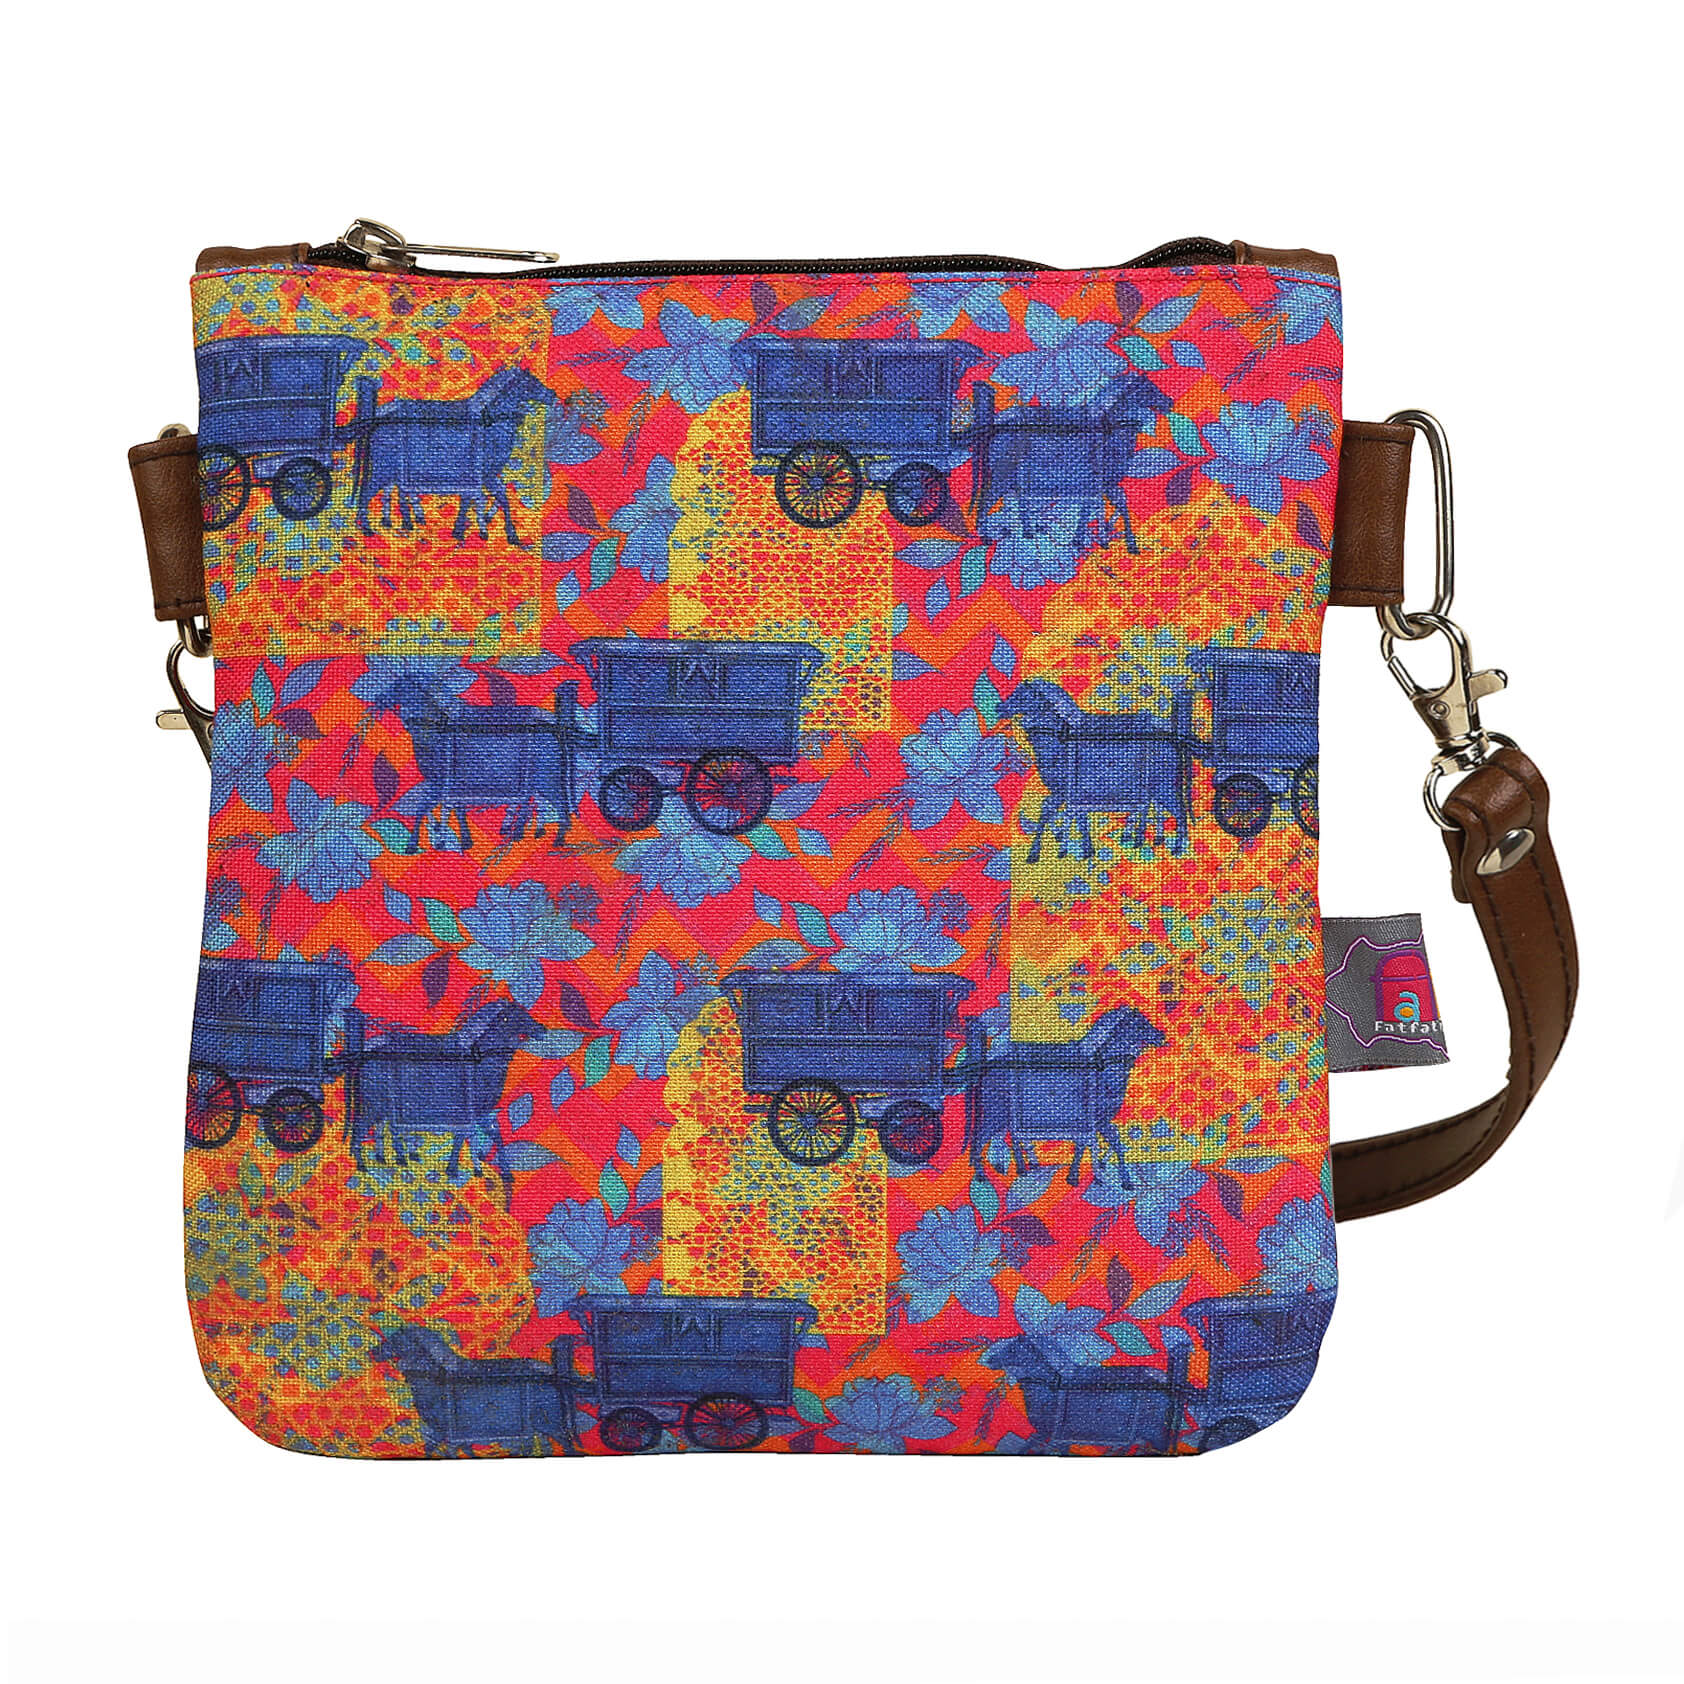 Shop Canvas Sling Bag Online in India